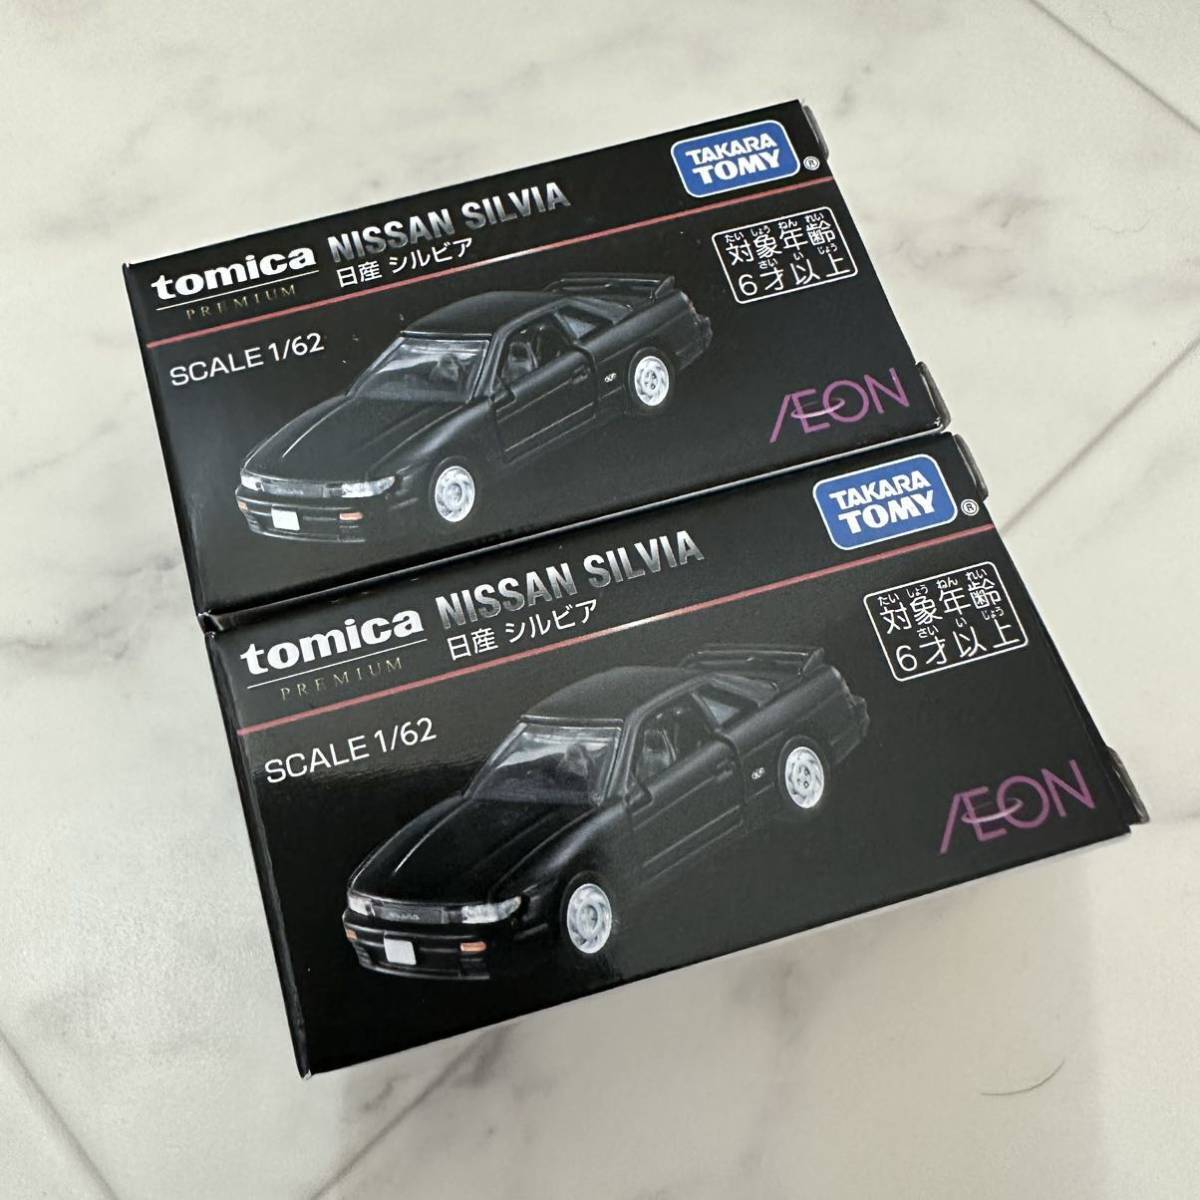 Set of 2 New Unopened Tomica Aeon Original Limited AEON Tomica Premium Nissan